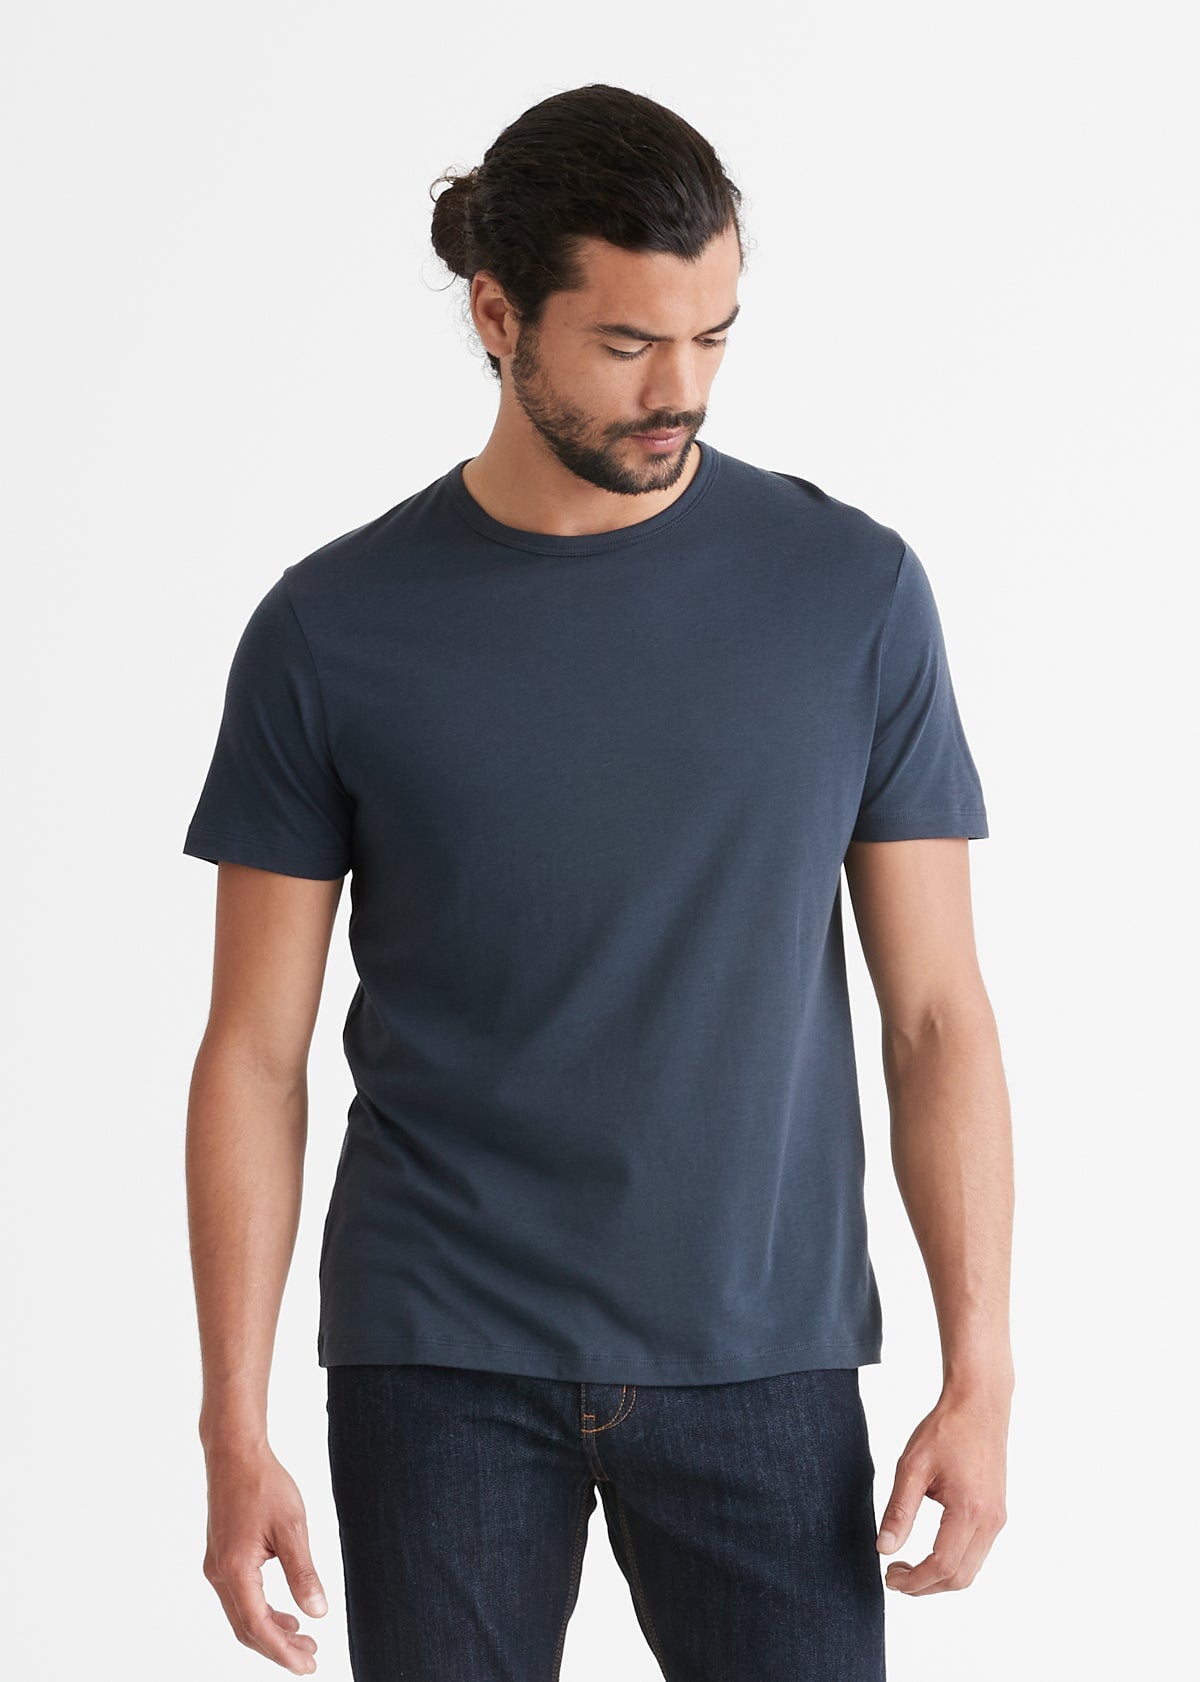 men's soft lightweight navy blue tshirt front